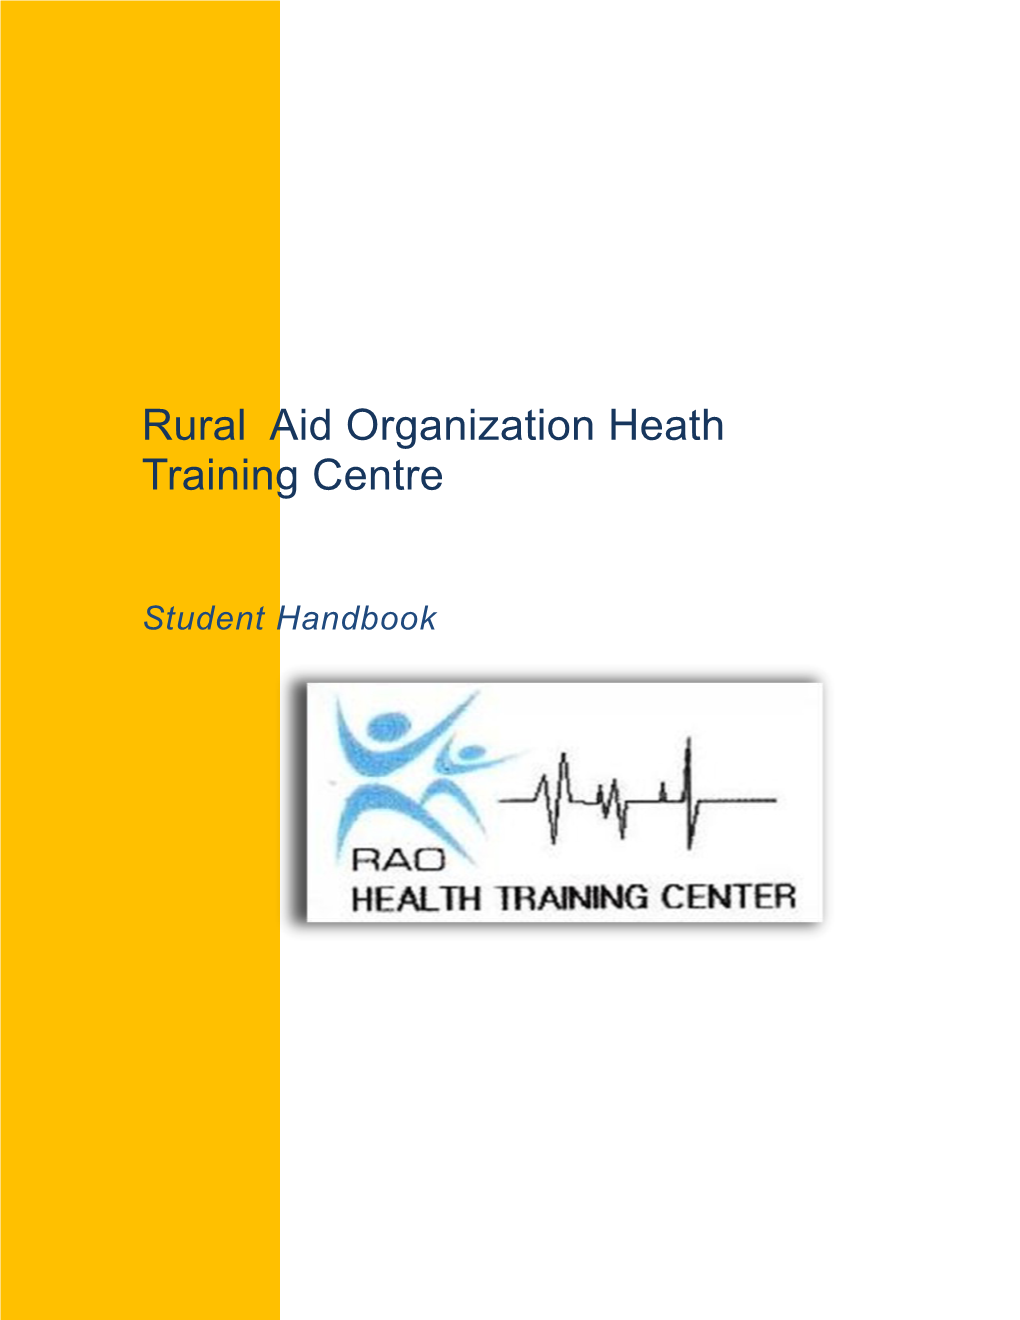 Rural Aid Organization Health Training Centre Student Handbook